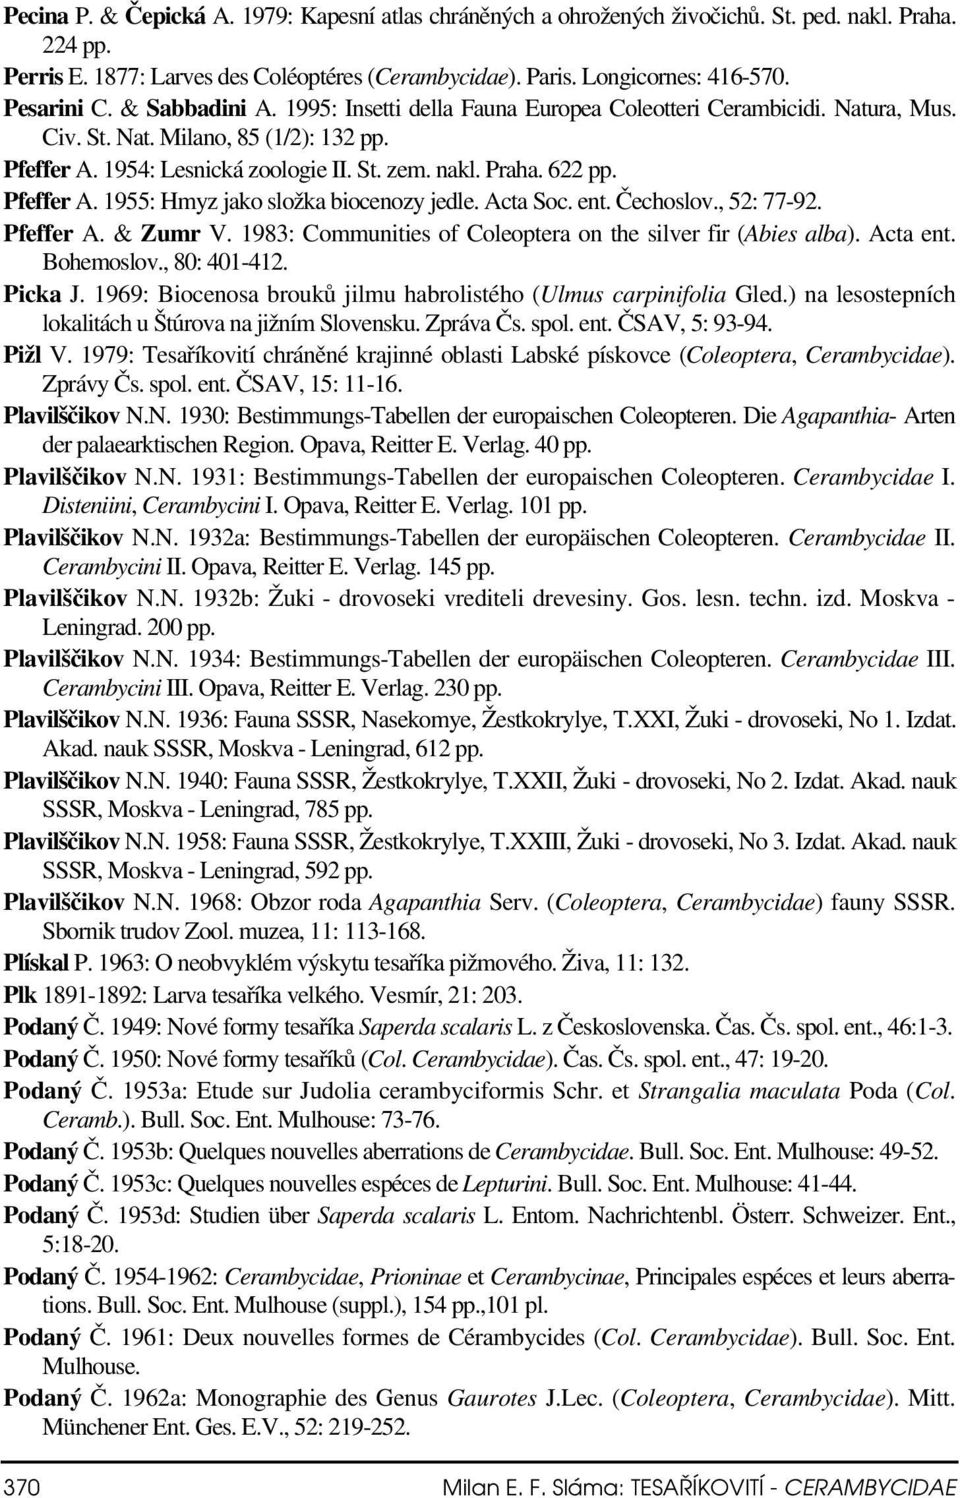 622 pp. Pfeffer A. 1955: Hmyz jako složka biocenozy jedle. Acta Soc. ent. Čechoslov., 52: 77-92. Pfeffer A. & Zumr V. 1983: Communities of Coleoptera on the silver fir (Abies alba). Acta ent.